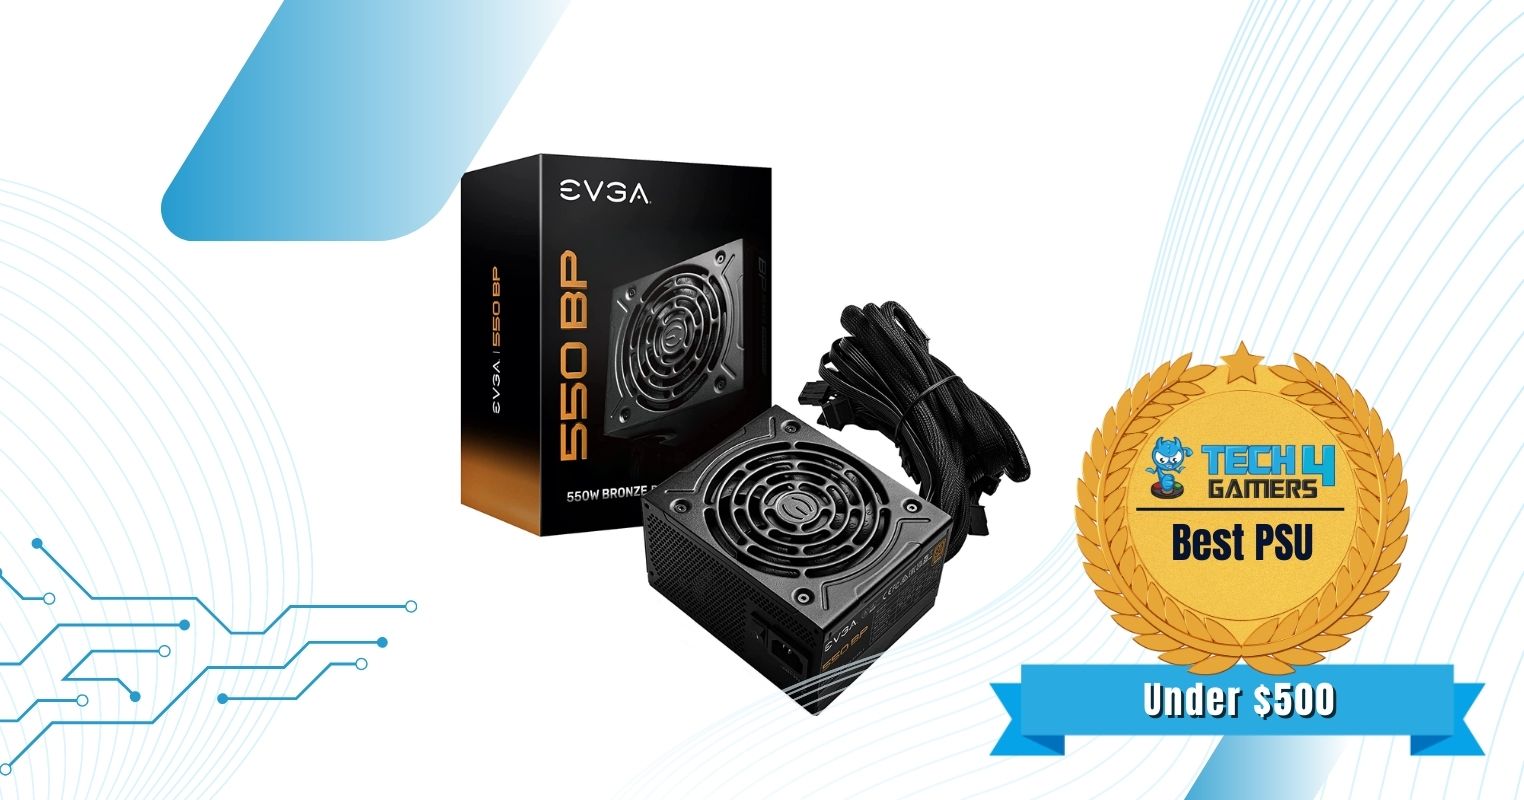 EVGA 550 BP 80+ Bronze PSU For Best Gaming PC Under $500